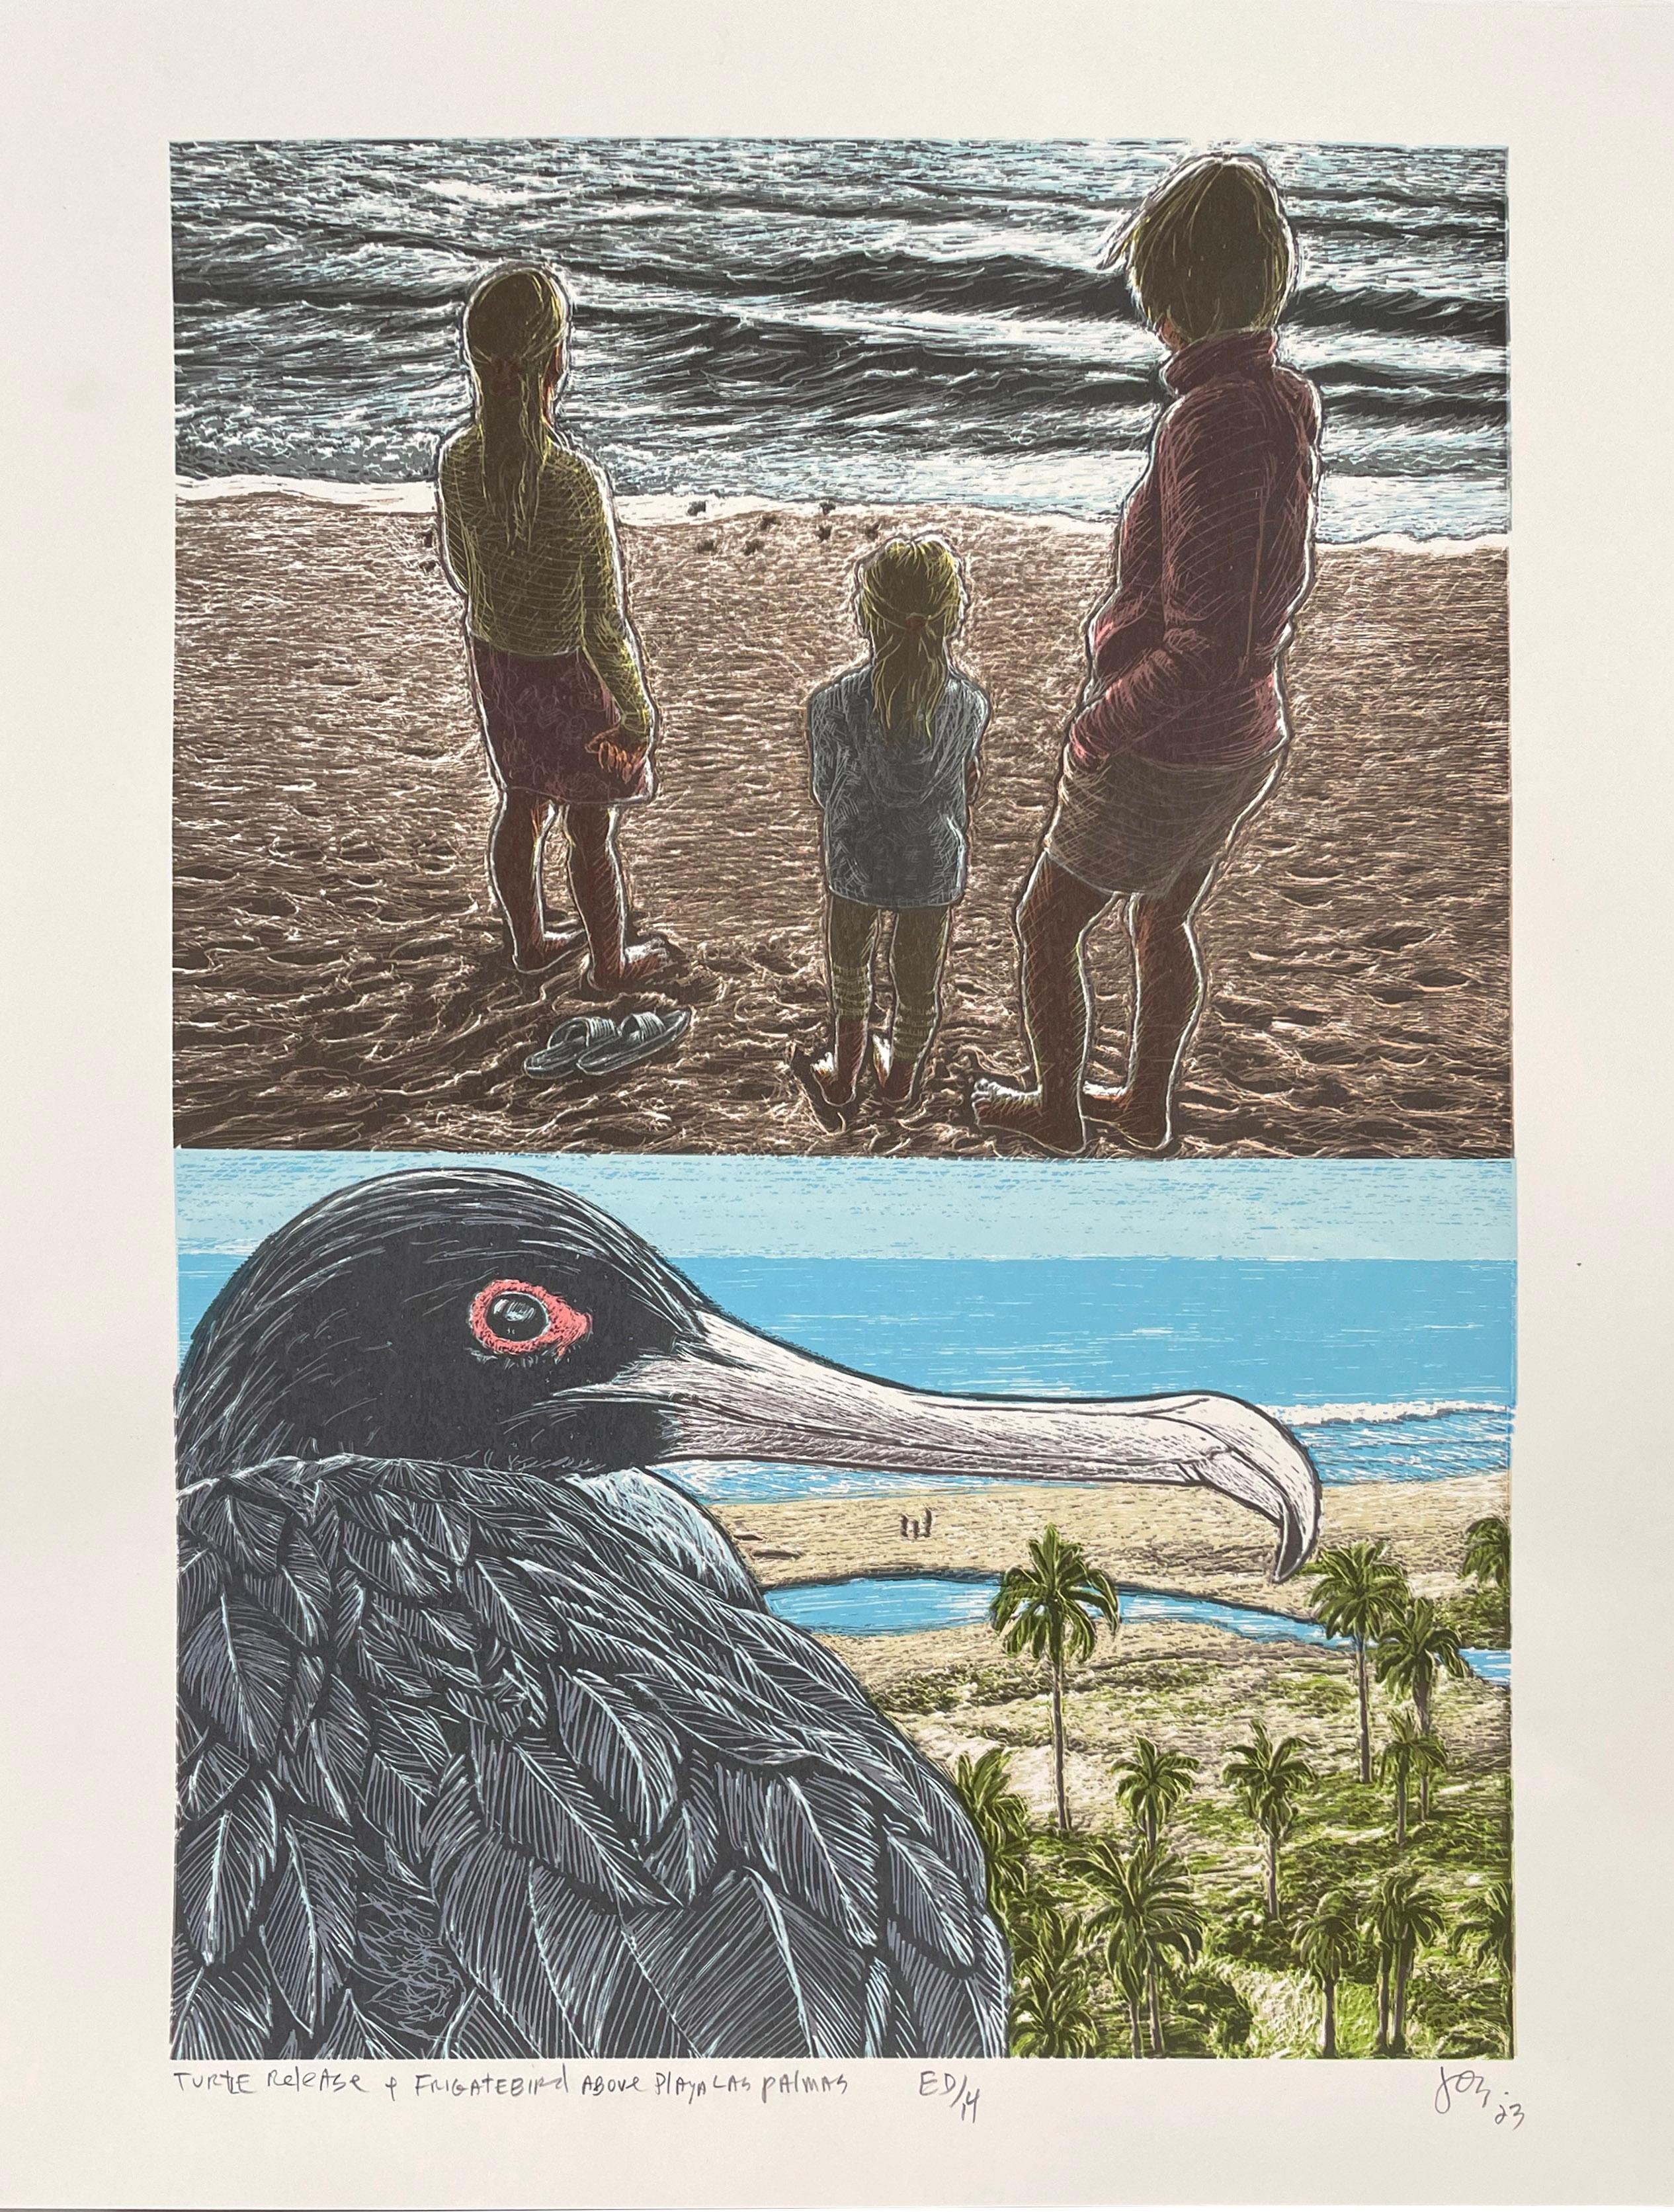 Turtle Release + FrIgate Bird Above Playa las Palmas - Print by Jos Sances